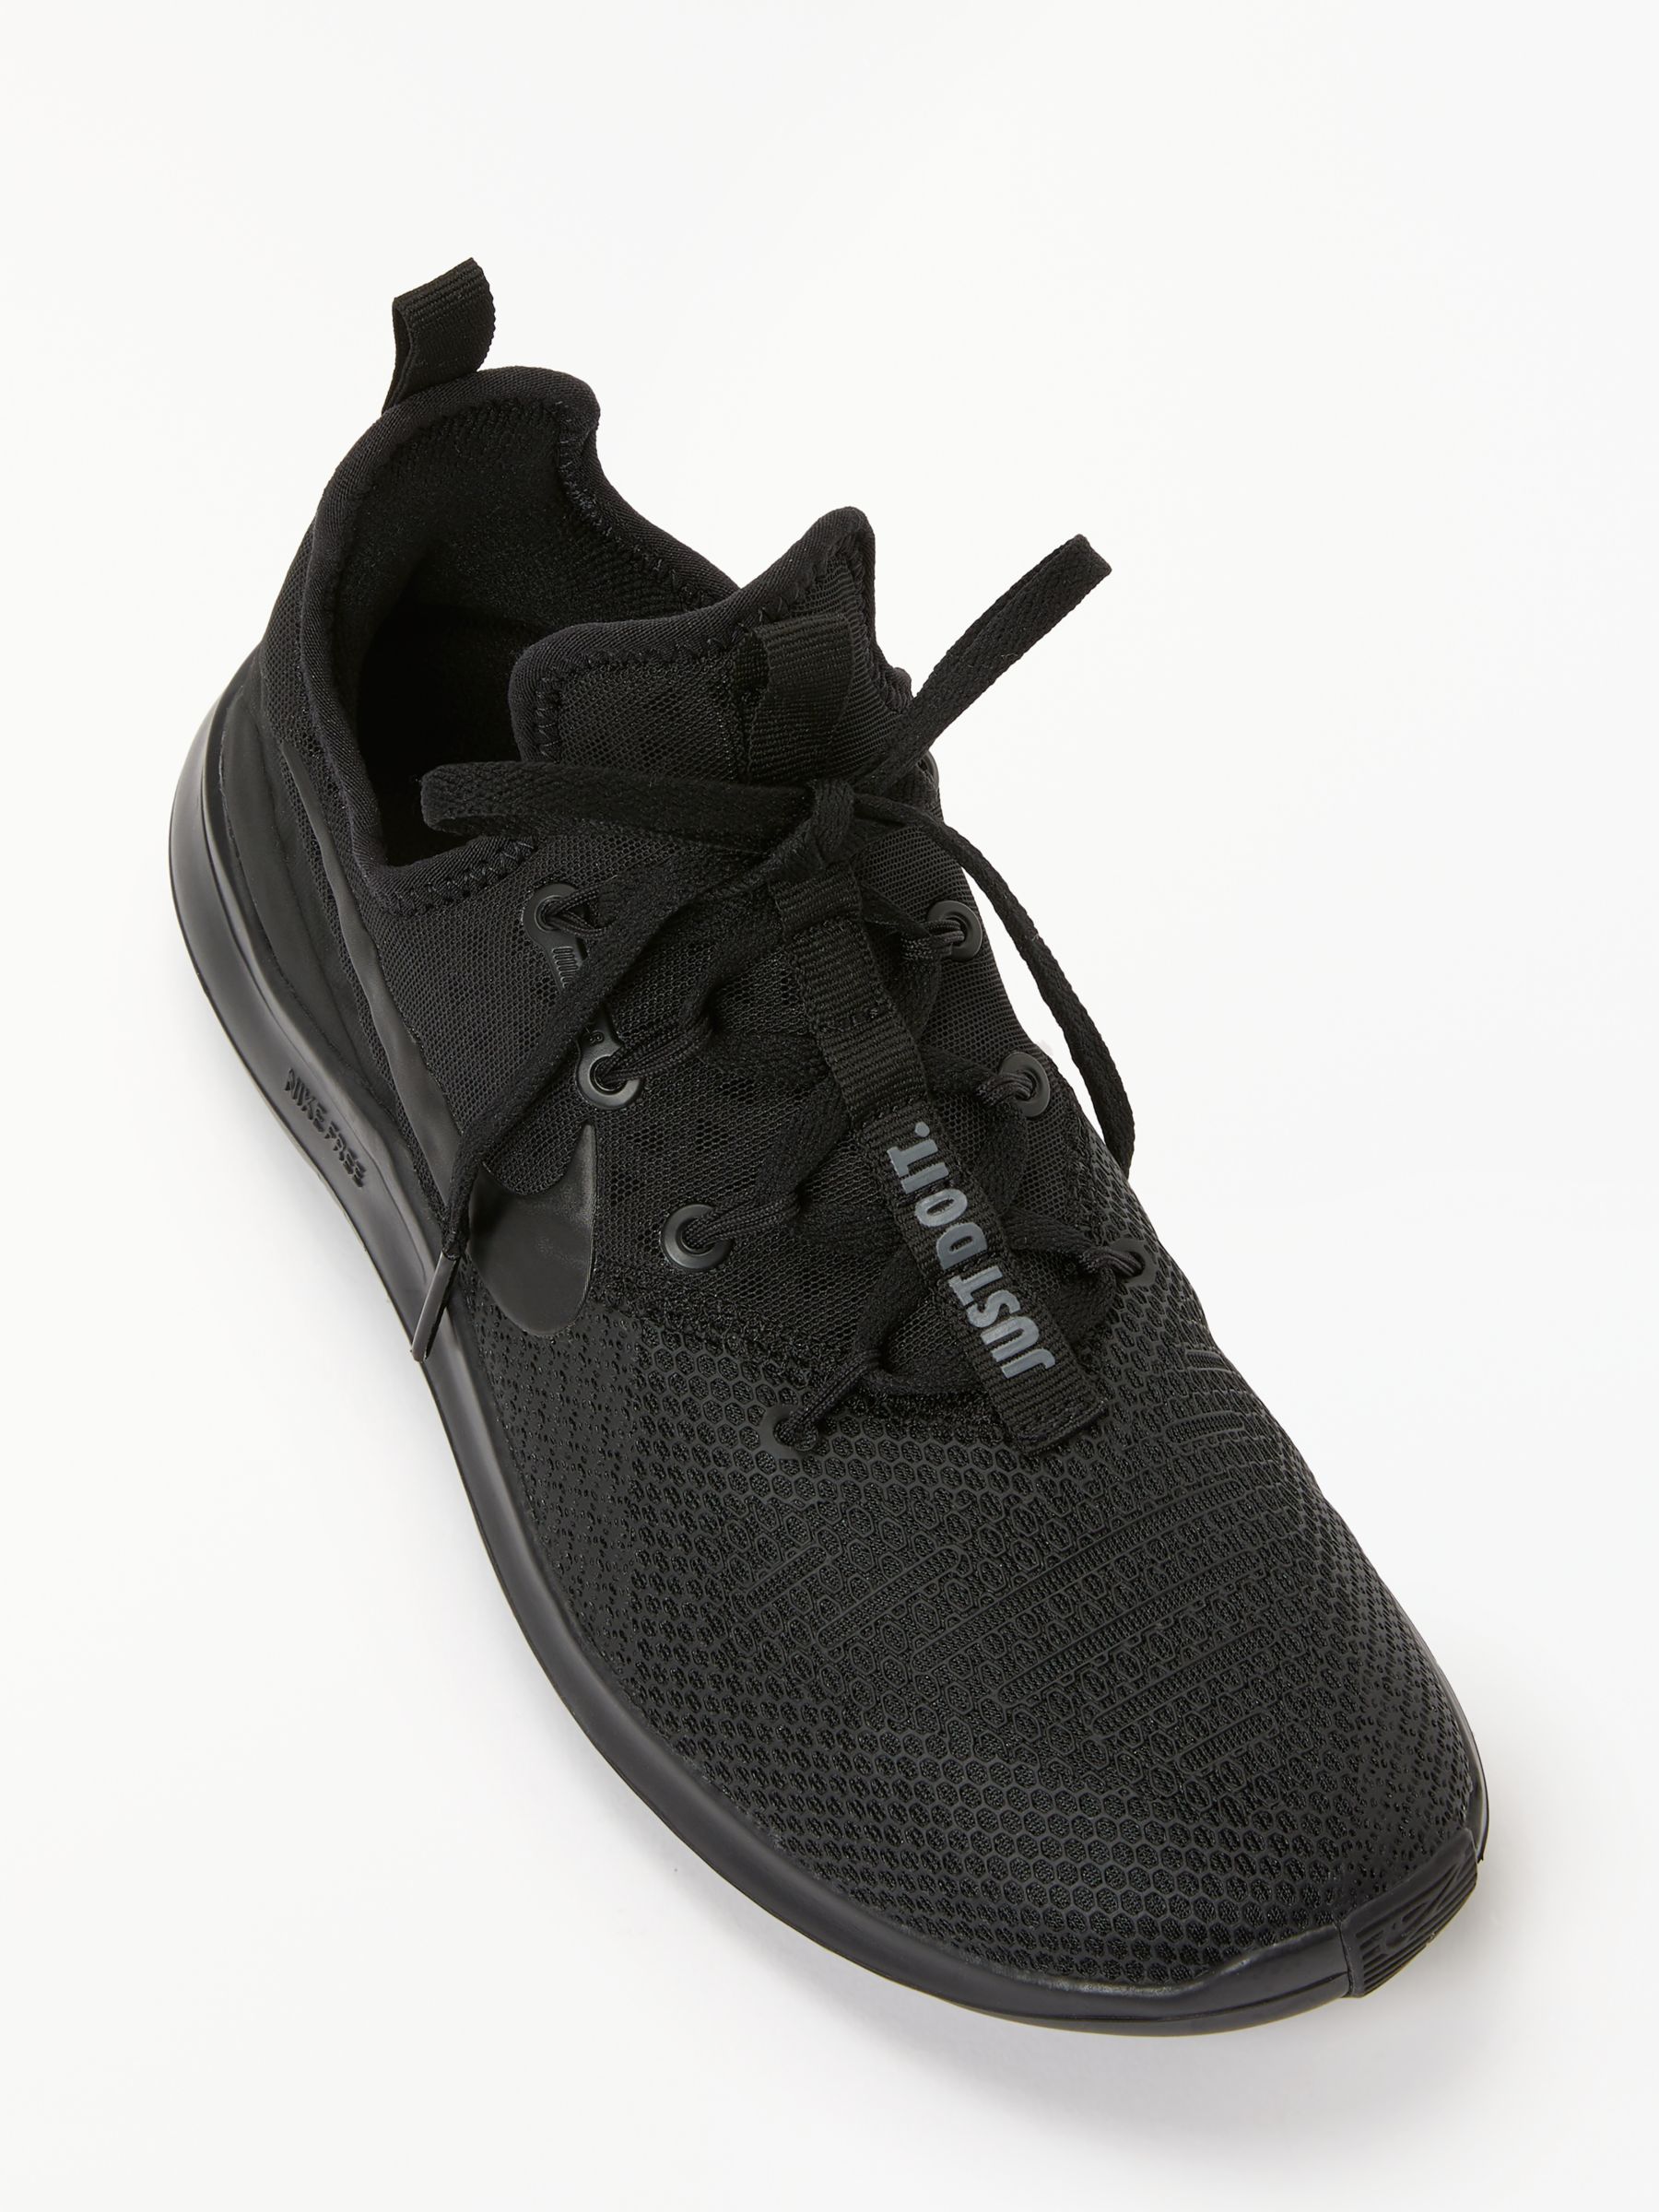 nike women's training shoes black